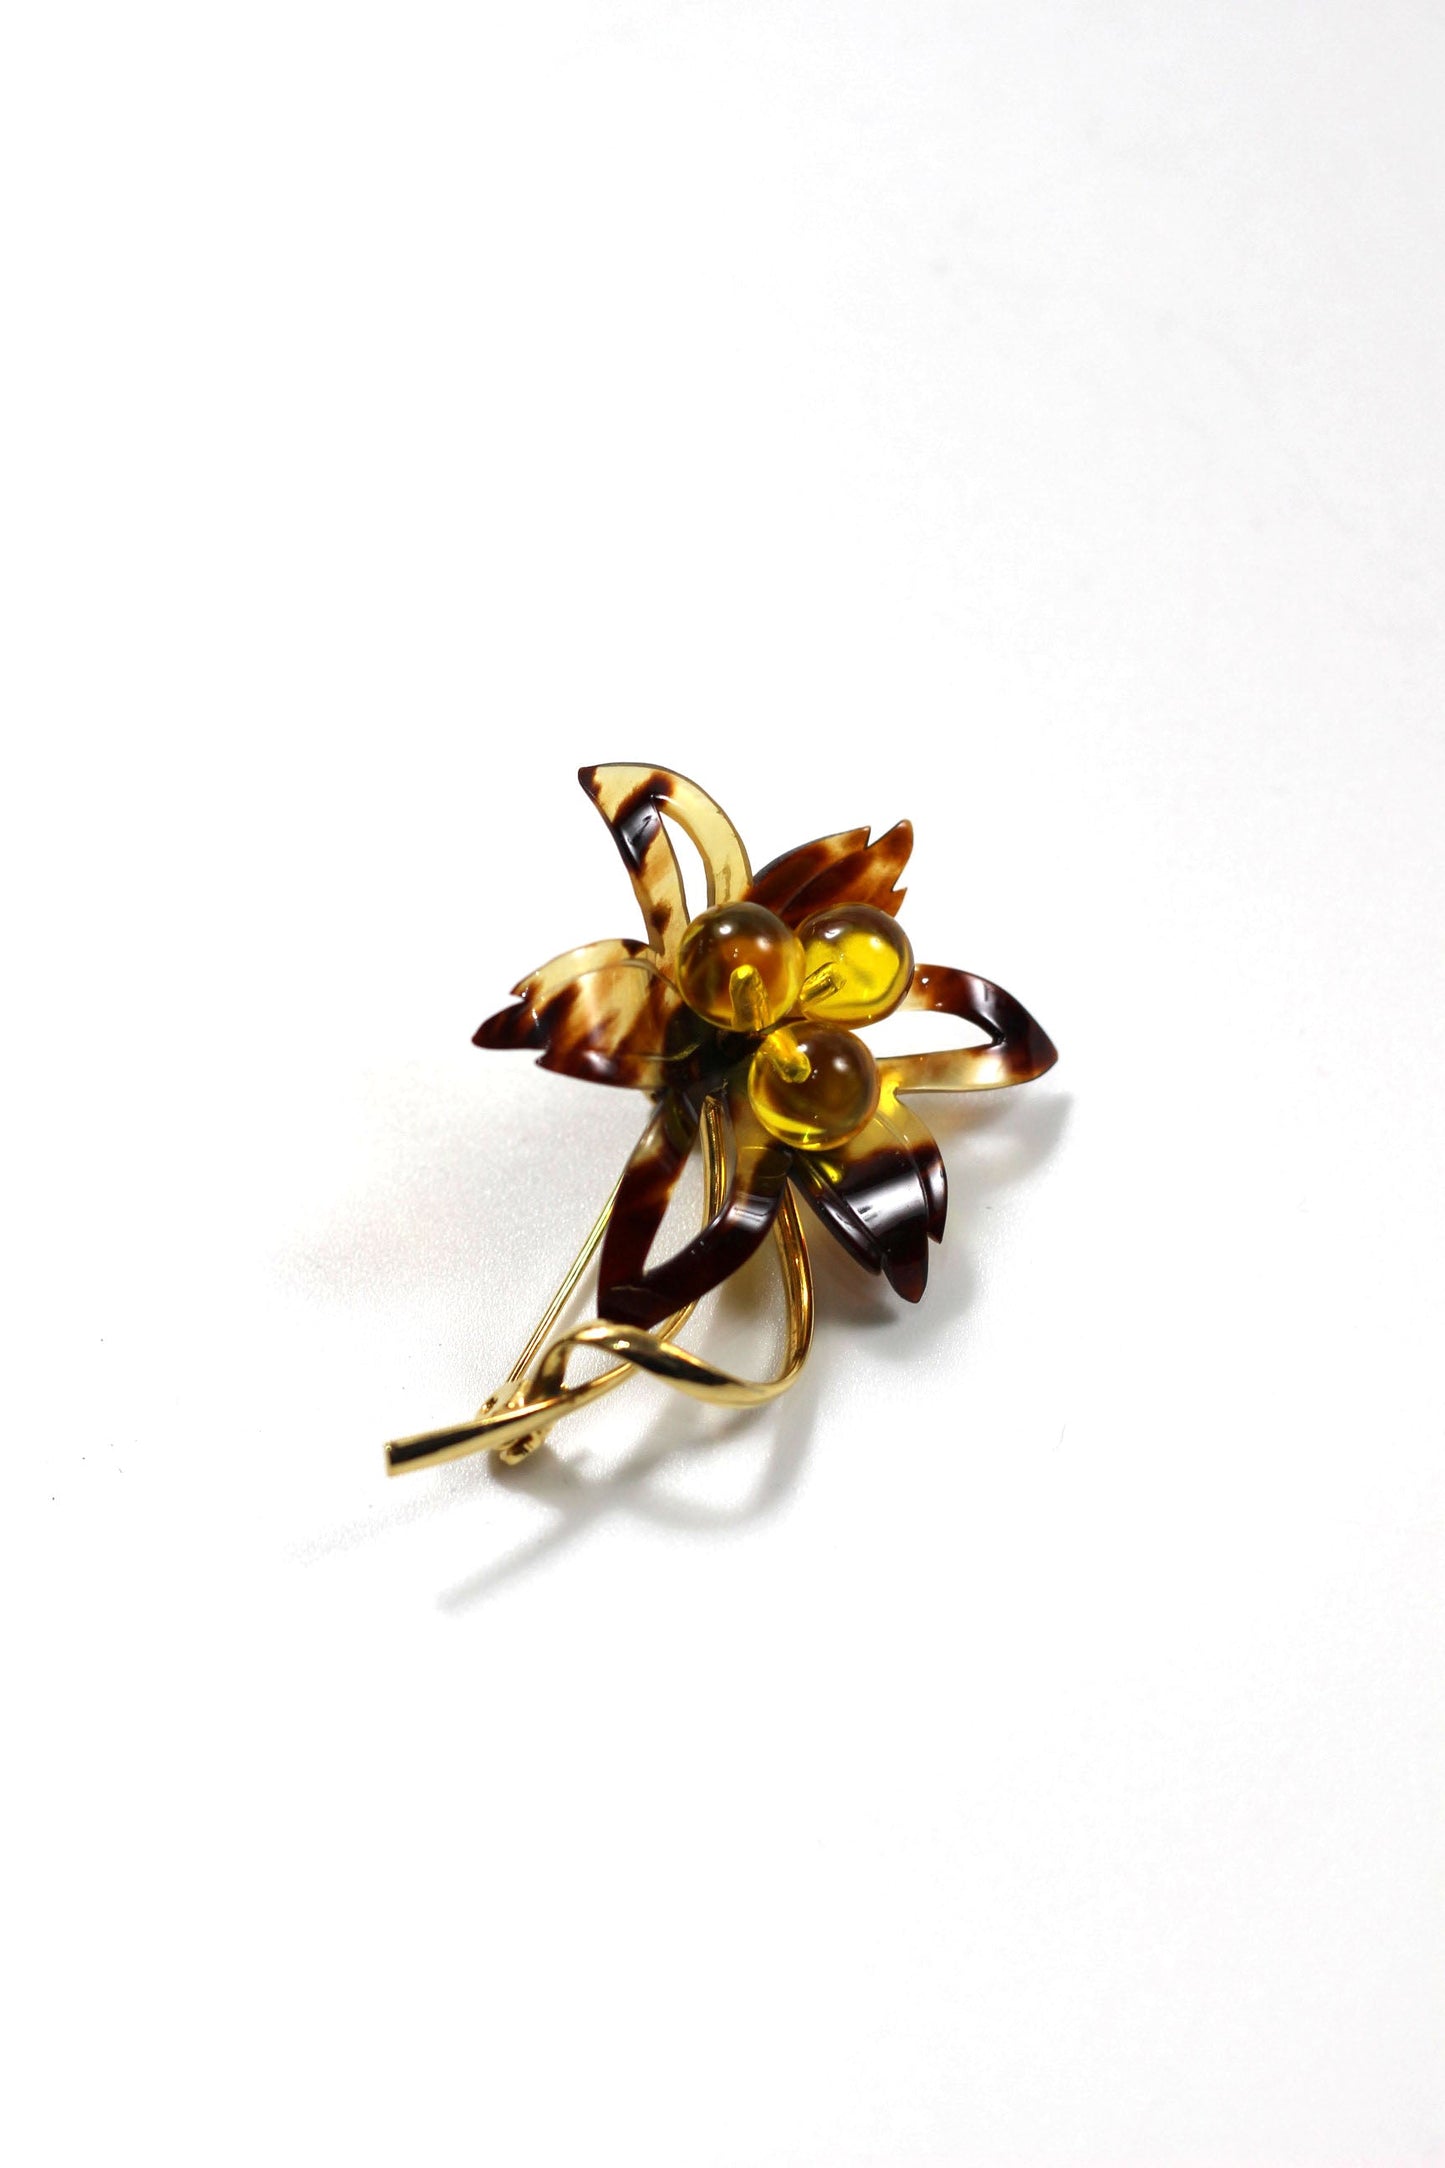 Vintage tortoiseshell brooch べっ甲のお花が彩る